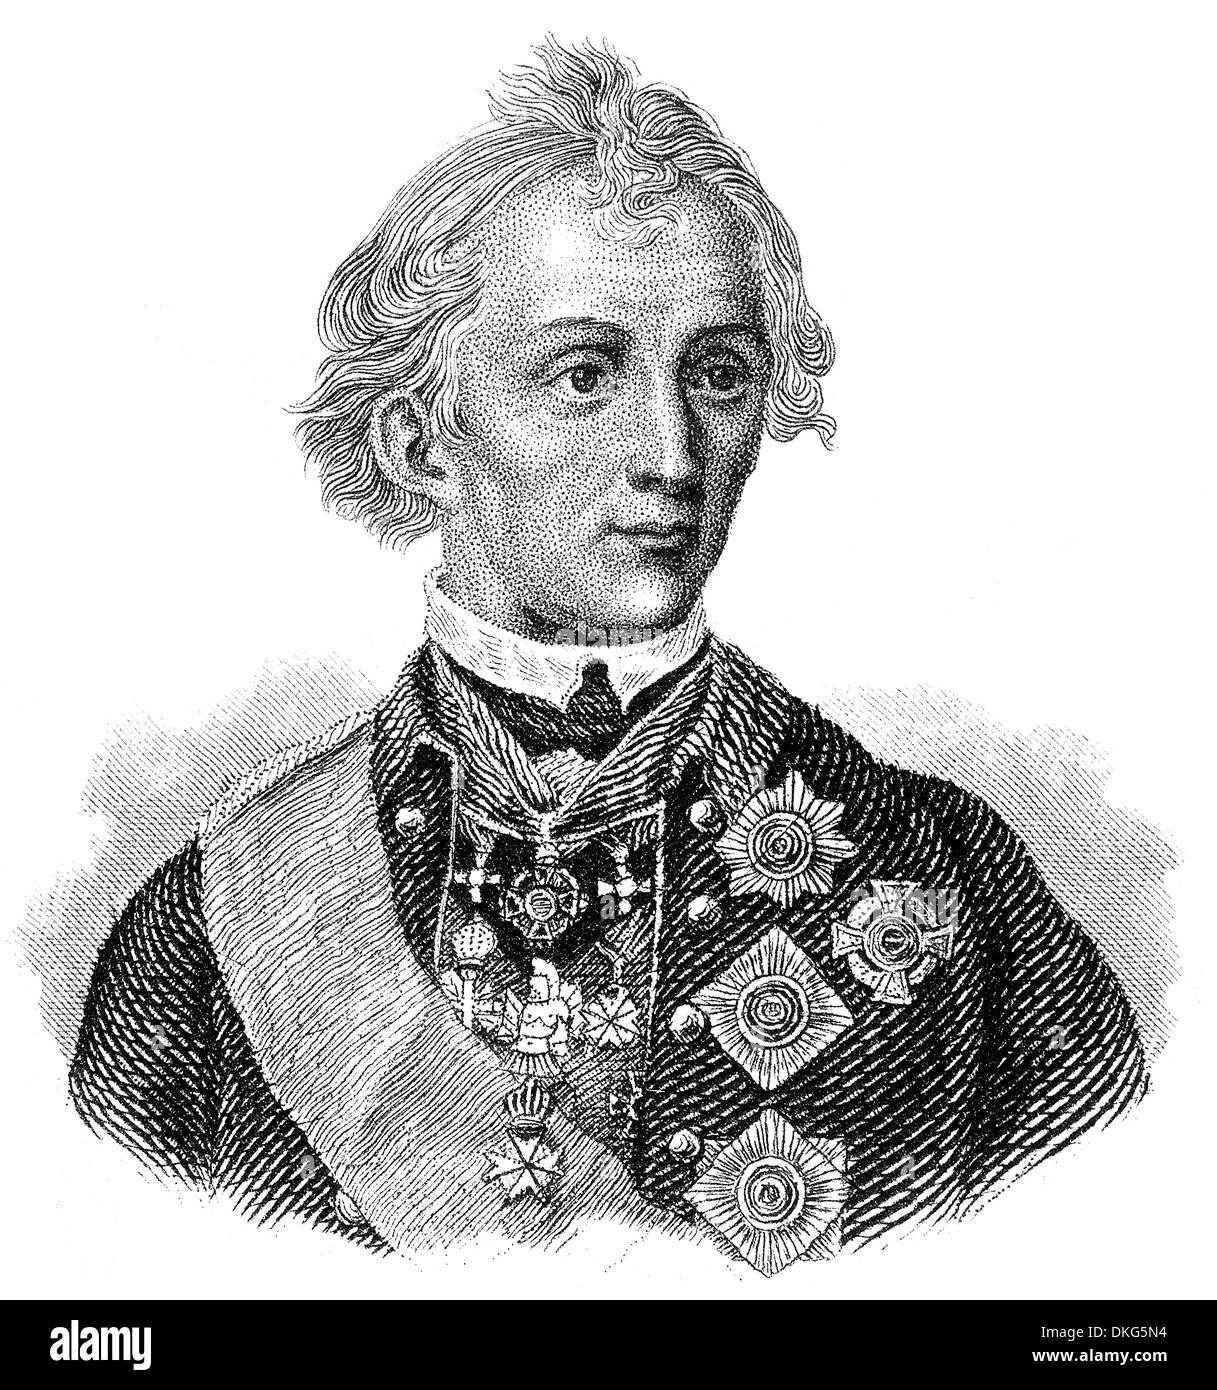 Alexander Vasilyevich Suvorov, 1729 o 1730 - 1800, il conte Suvorov di Rymnik, principe d'Italia, Conte del Sacro Romano Impero, Foto Stock